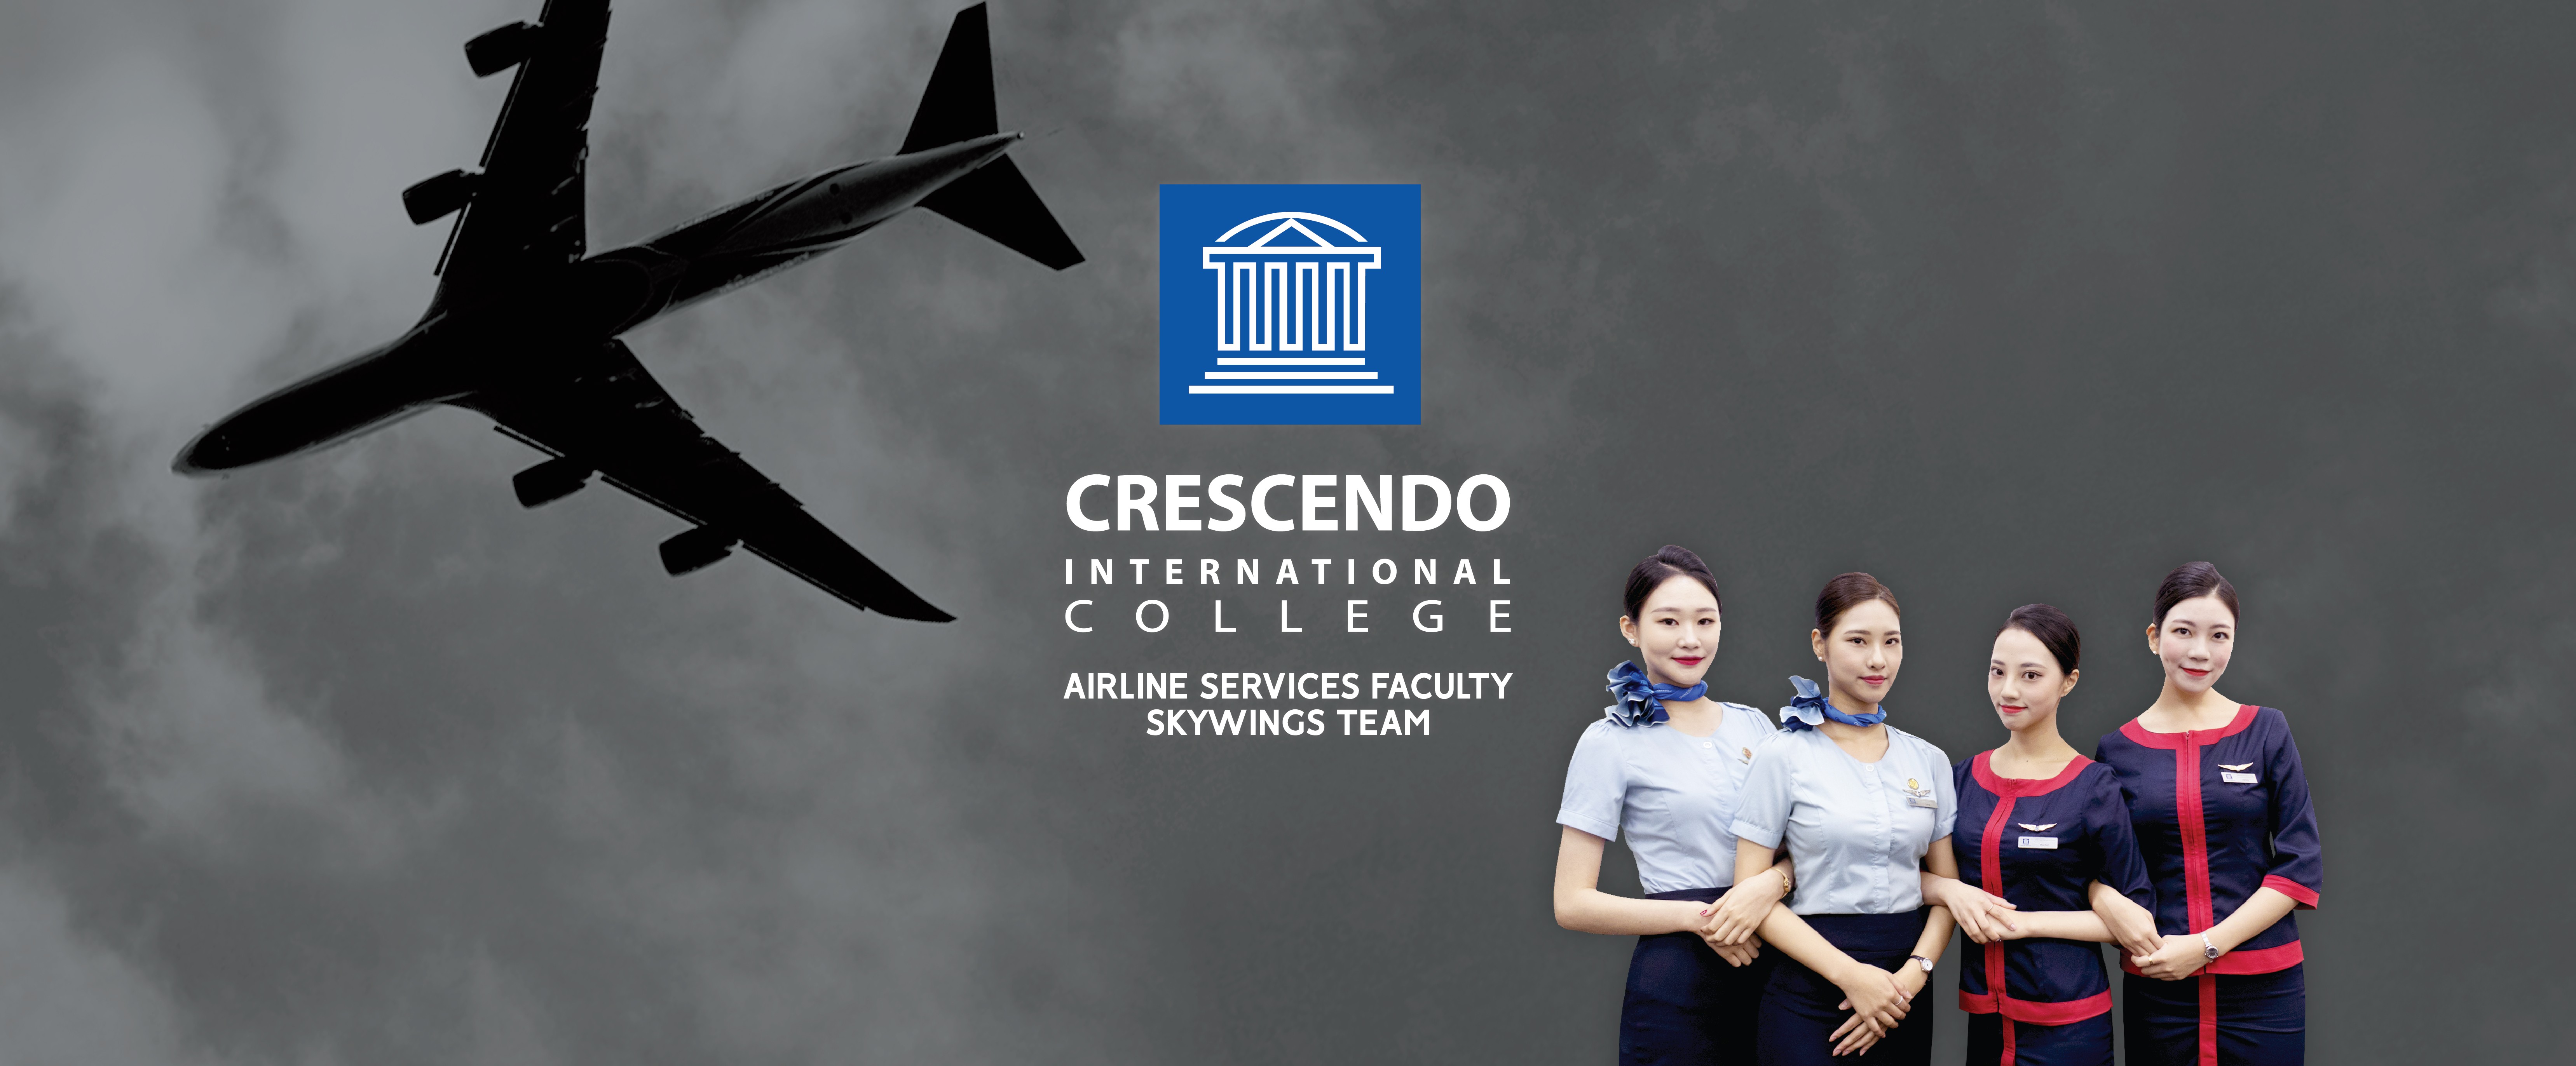 Crescendo international college